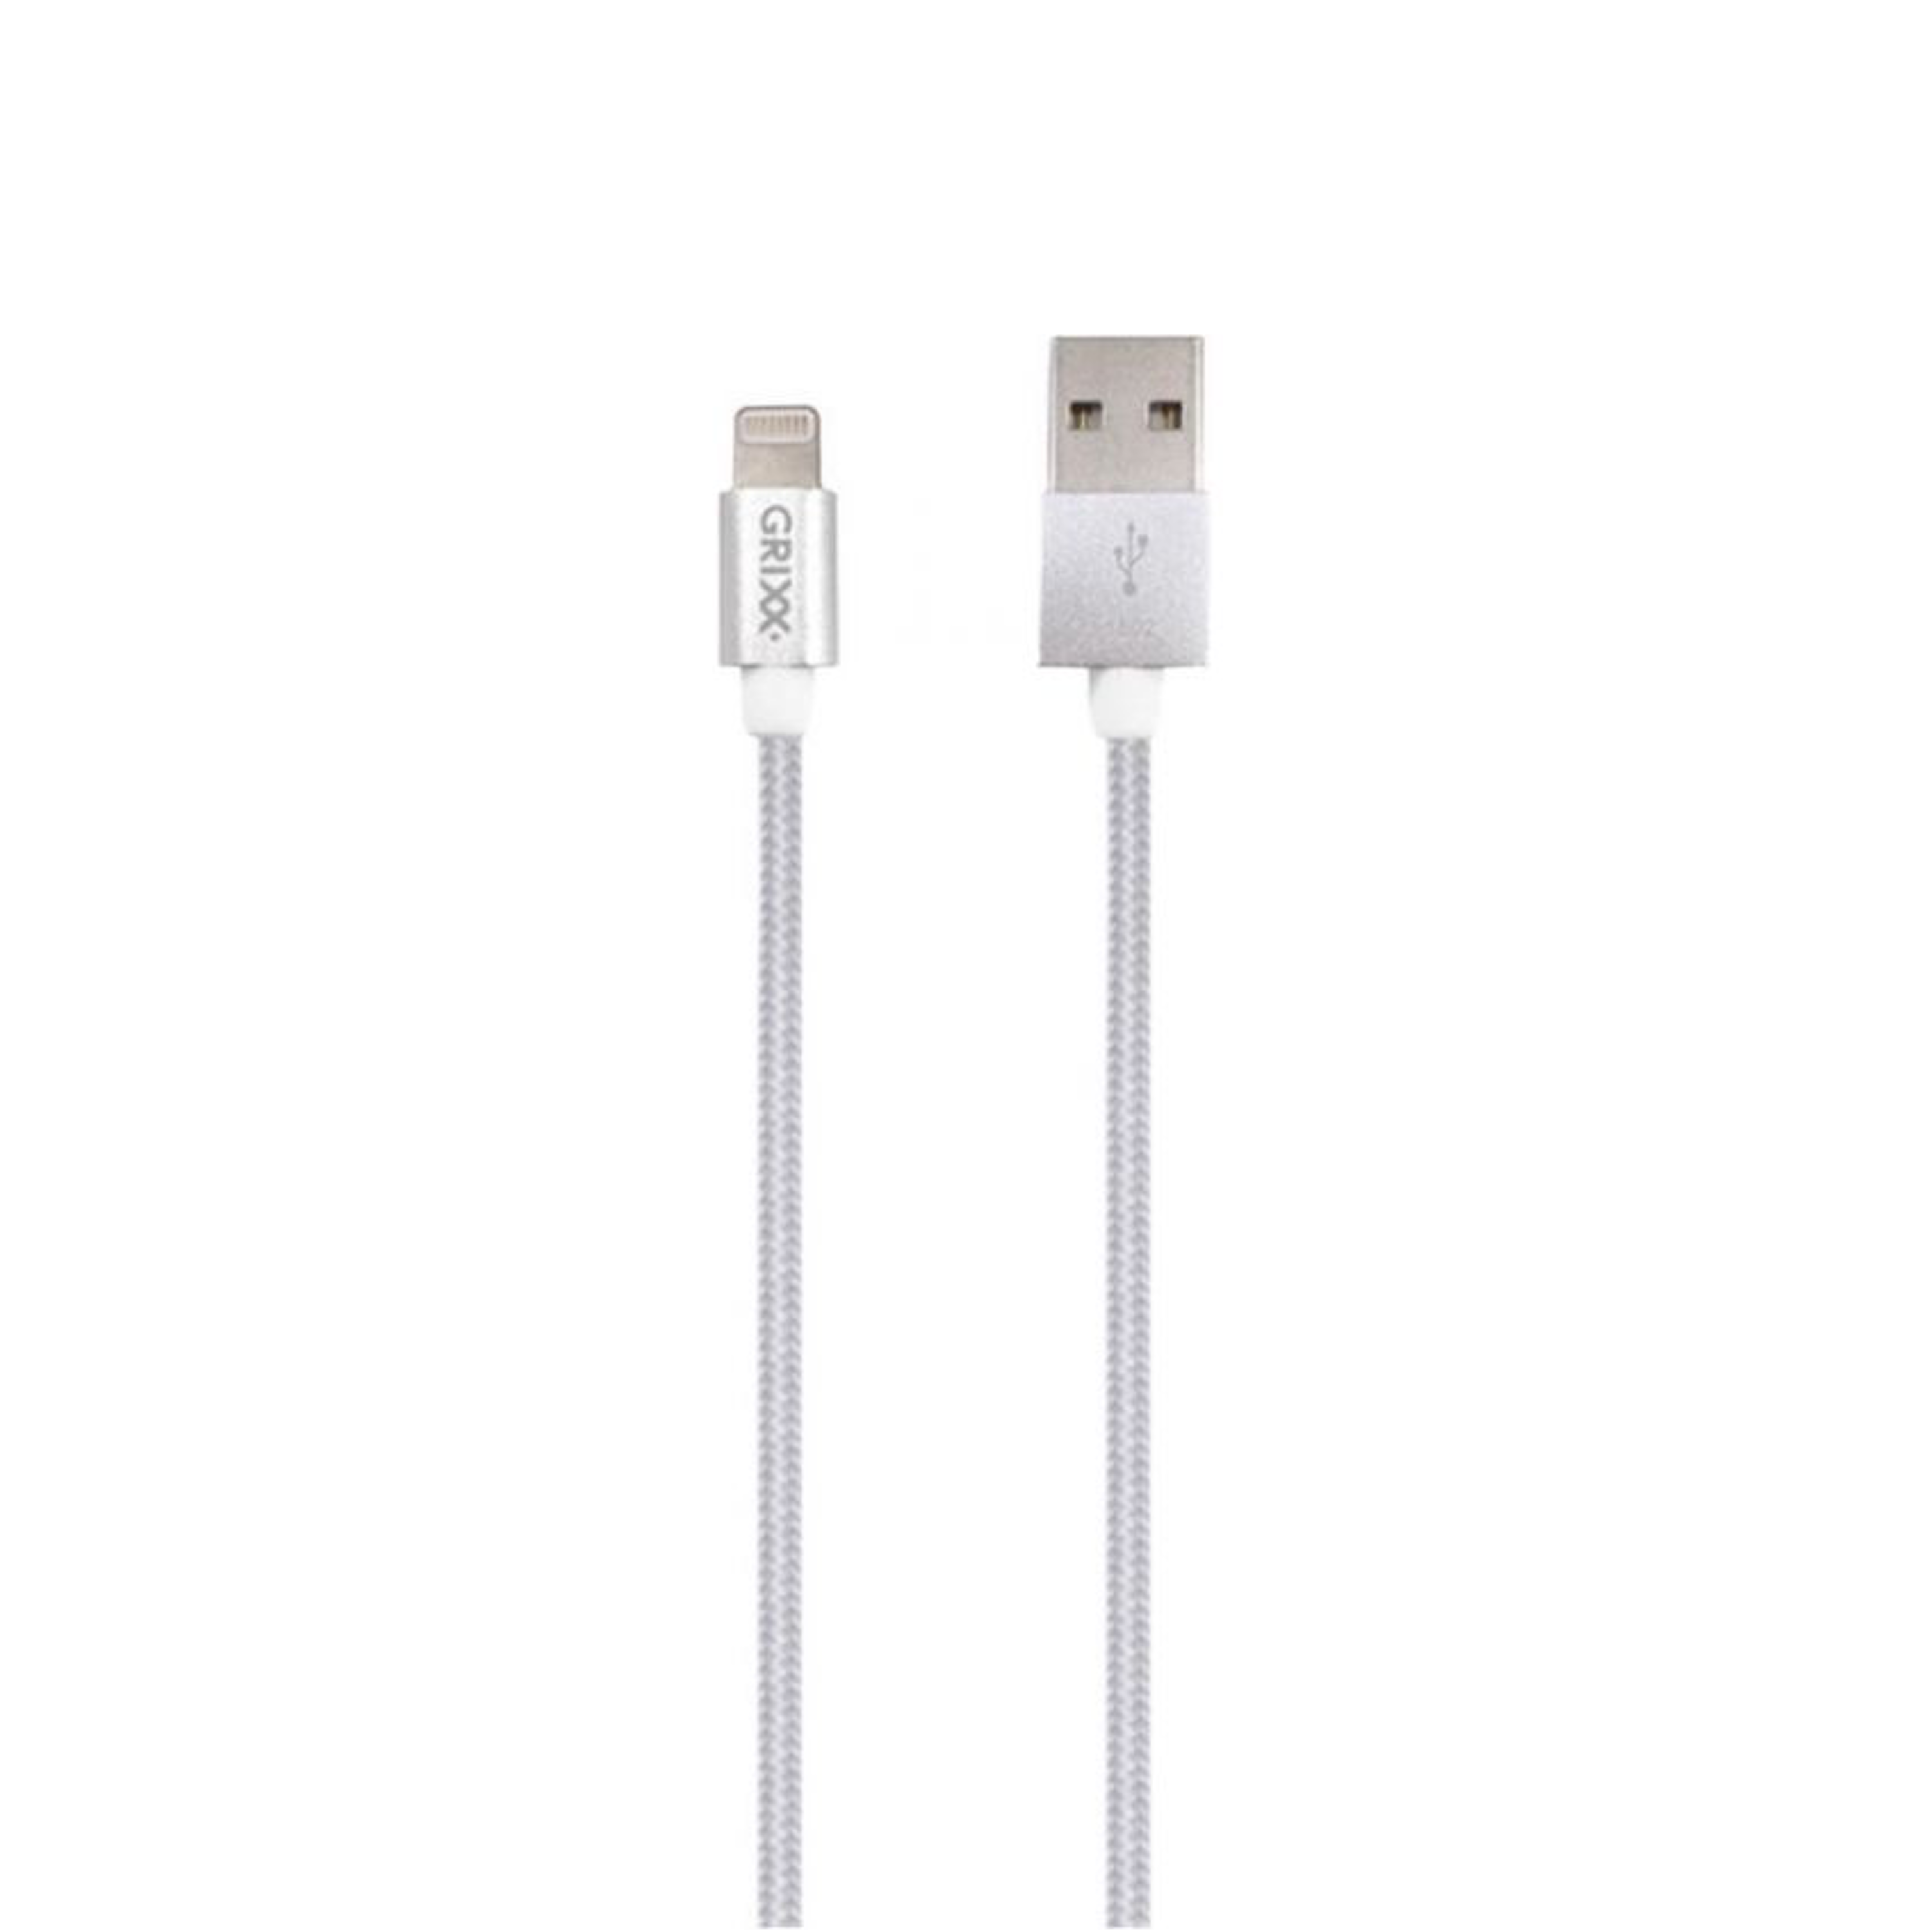 PHILIPS USB-A Lightning Grixx Weiß Optimum Kabel auf